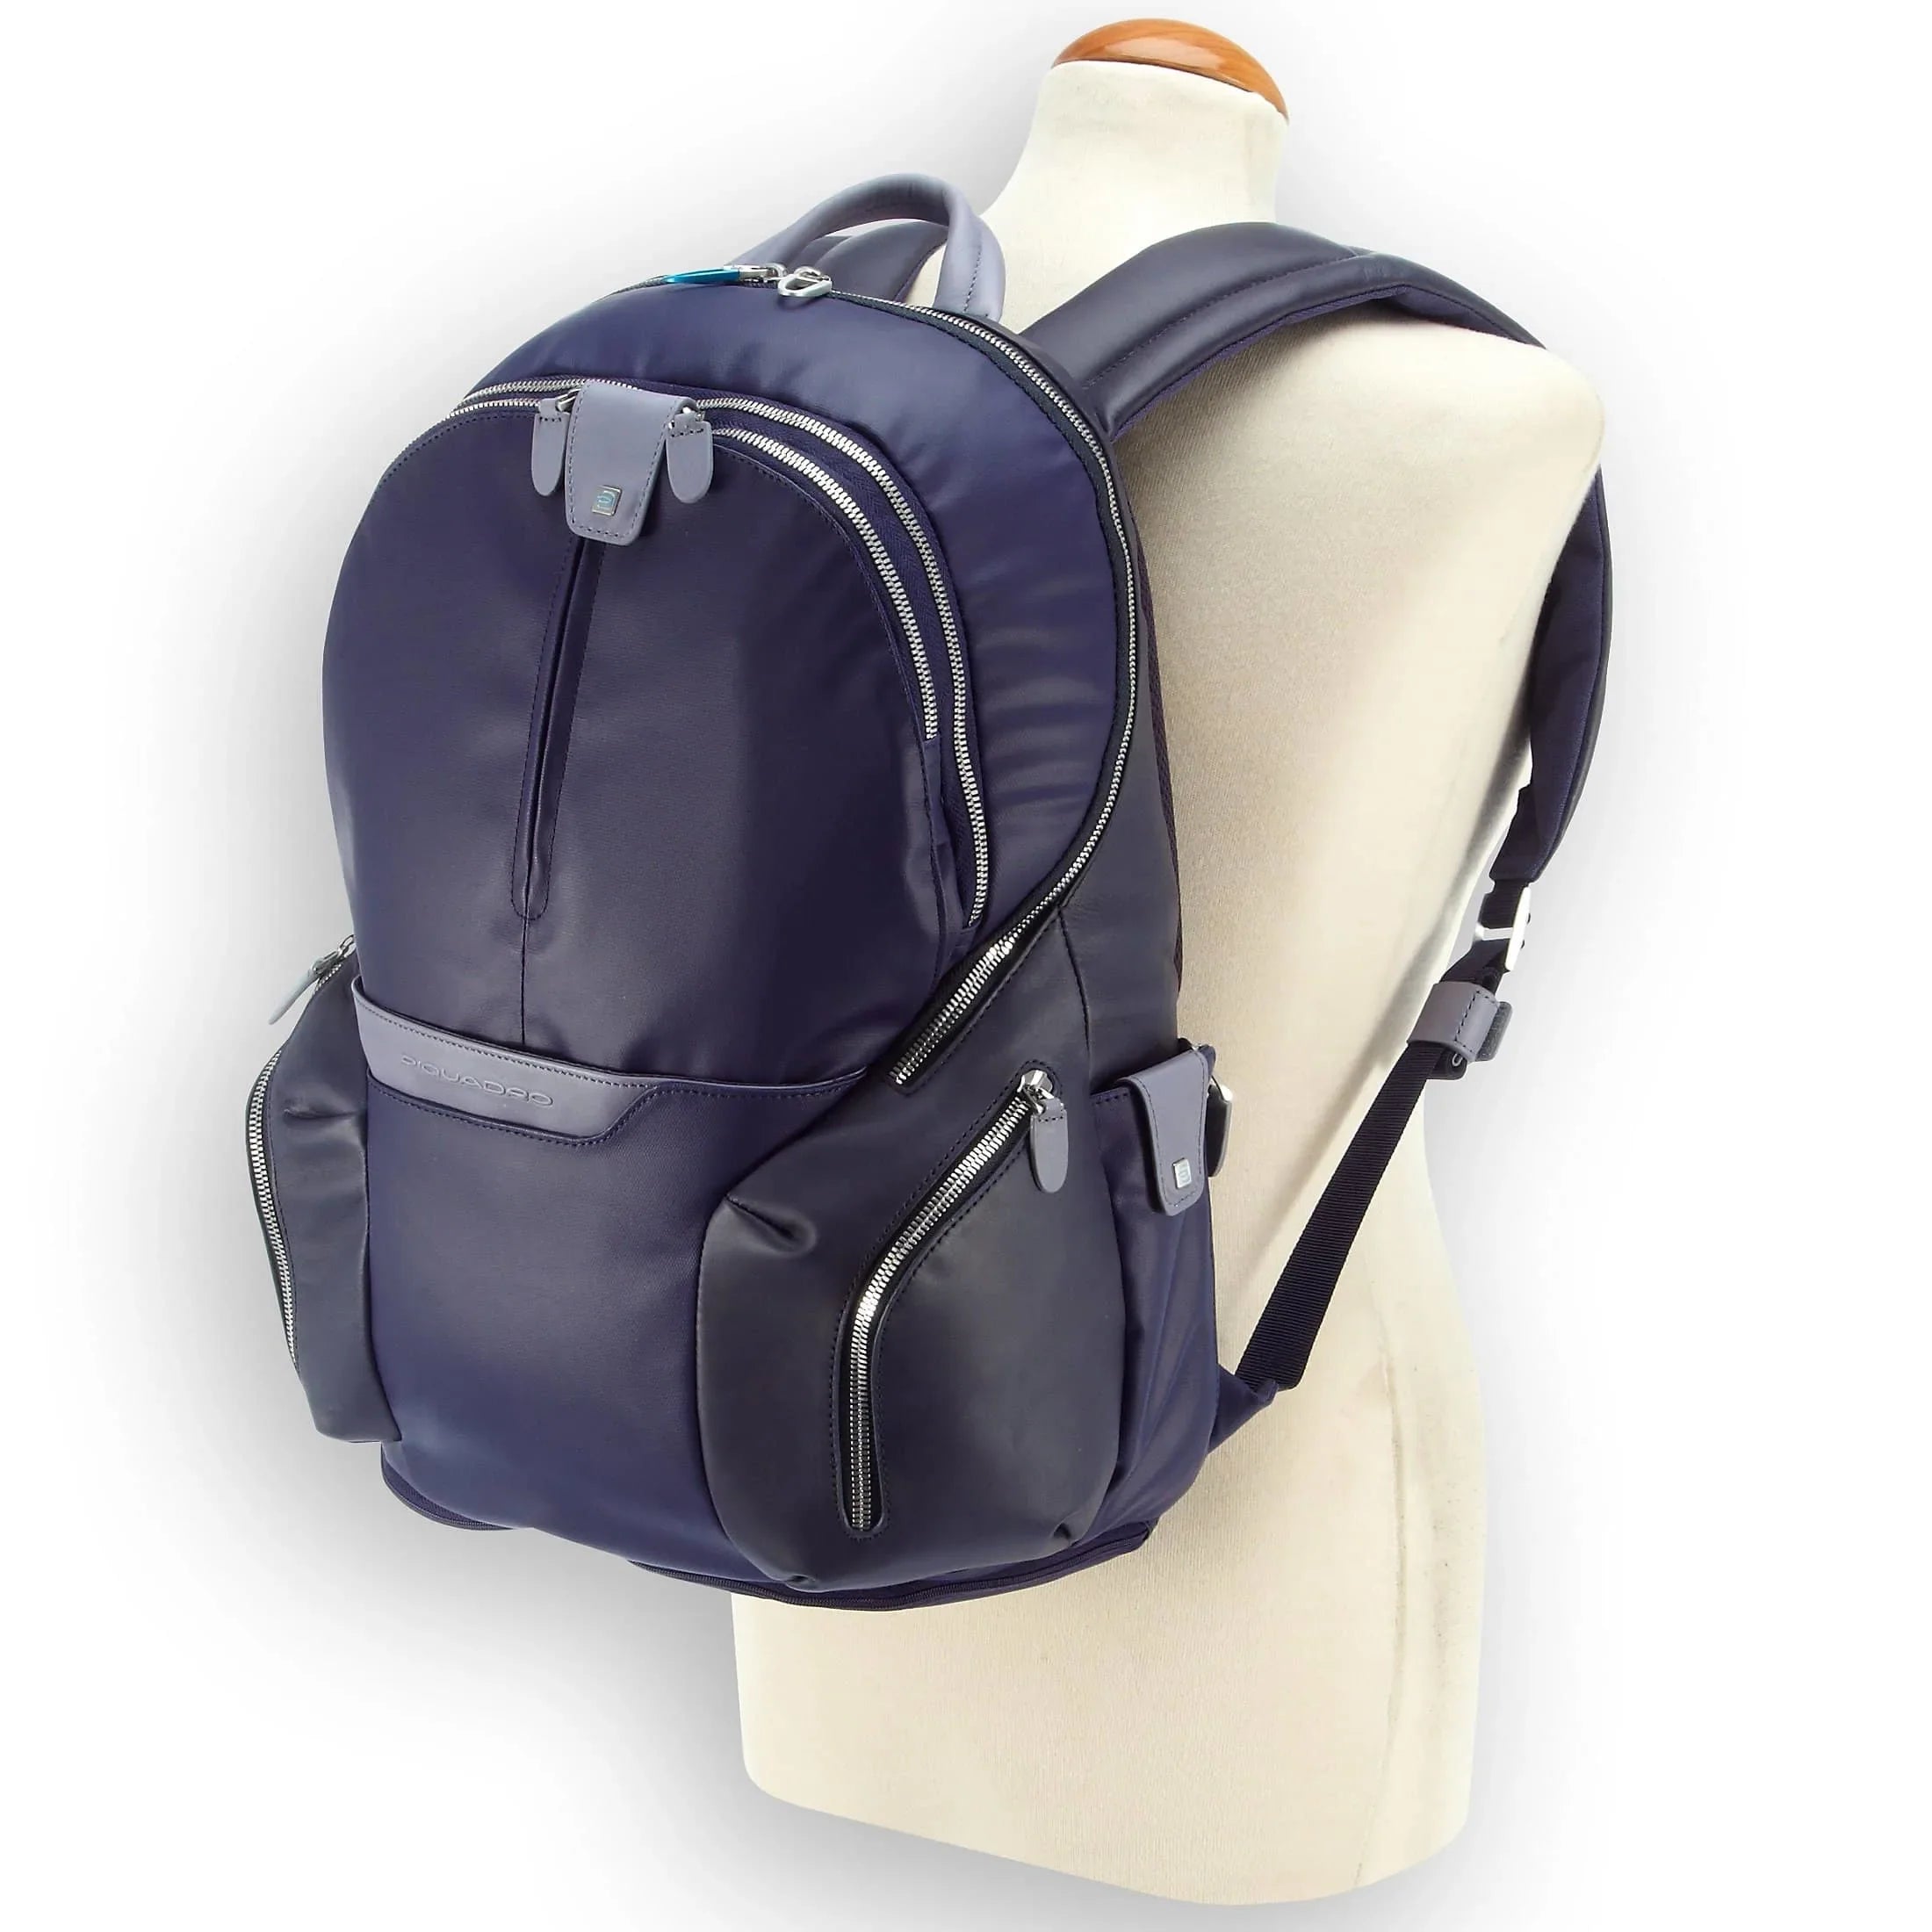 Piquadro Coleos laptop backpack 42 cm - dark blue/ light blue